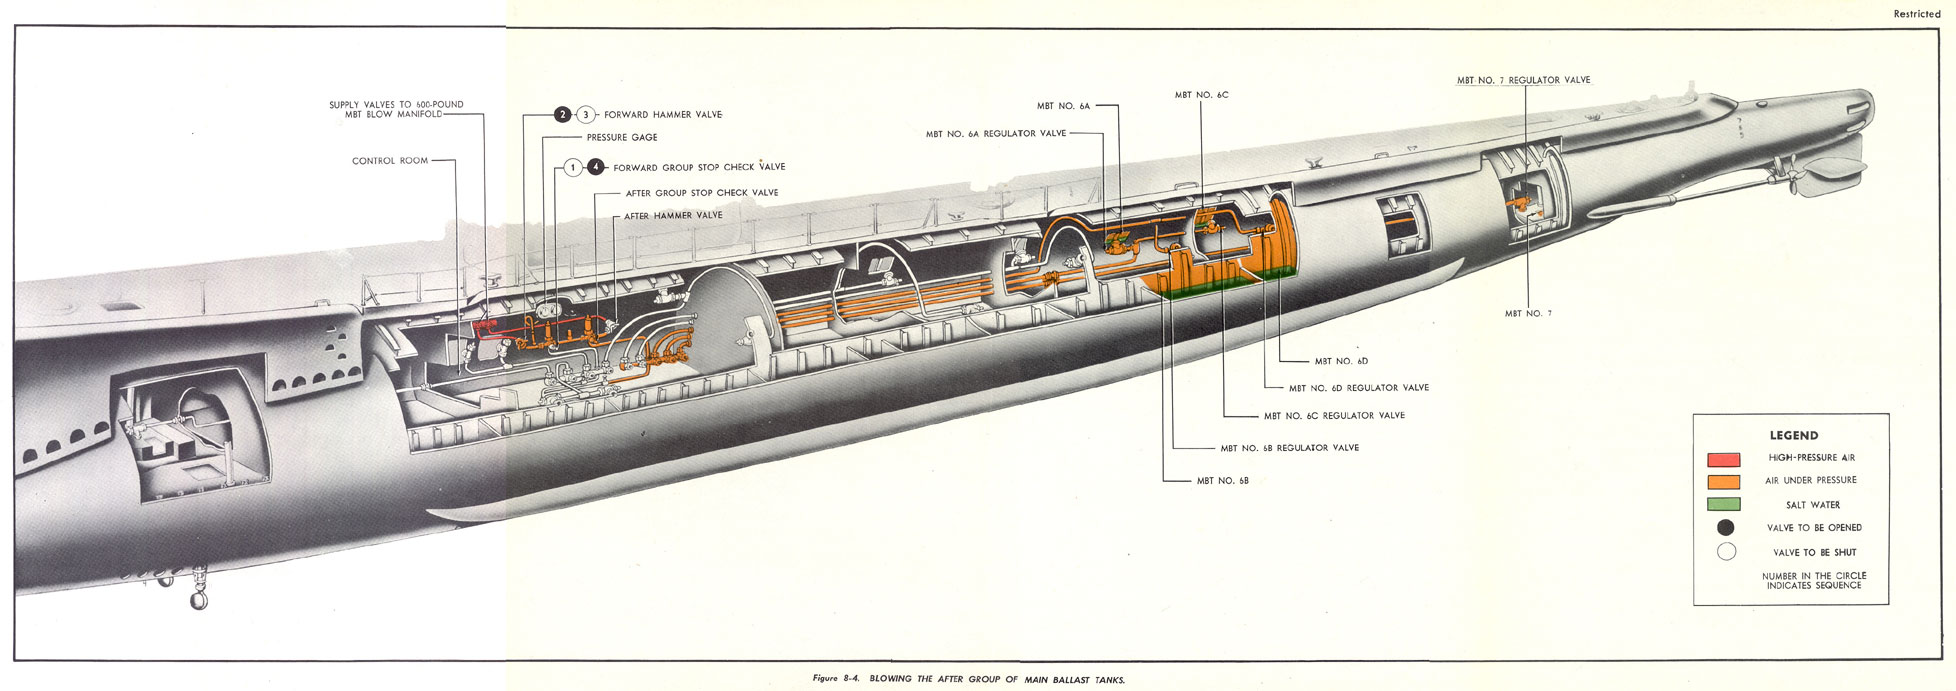 Main sub. Подводные лодки балласт. Как работает балласт в подводной лодке. Балласт оружие. Судовой балласт чертеж.